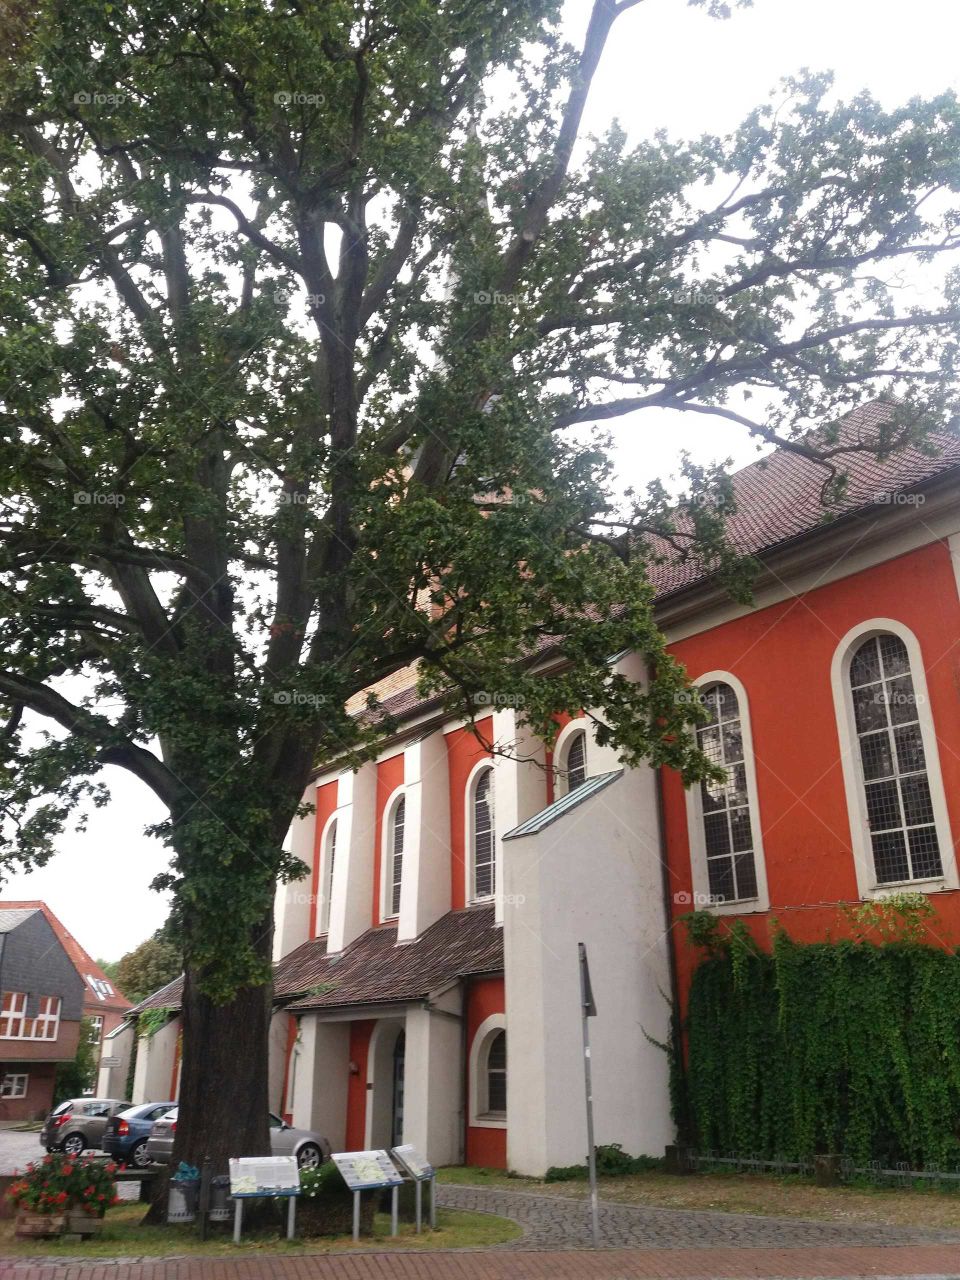 Church and Tree in Gartow